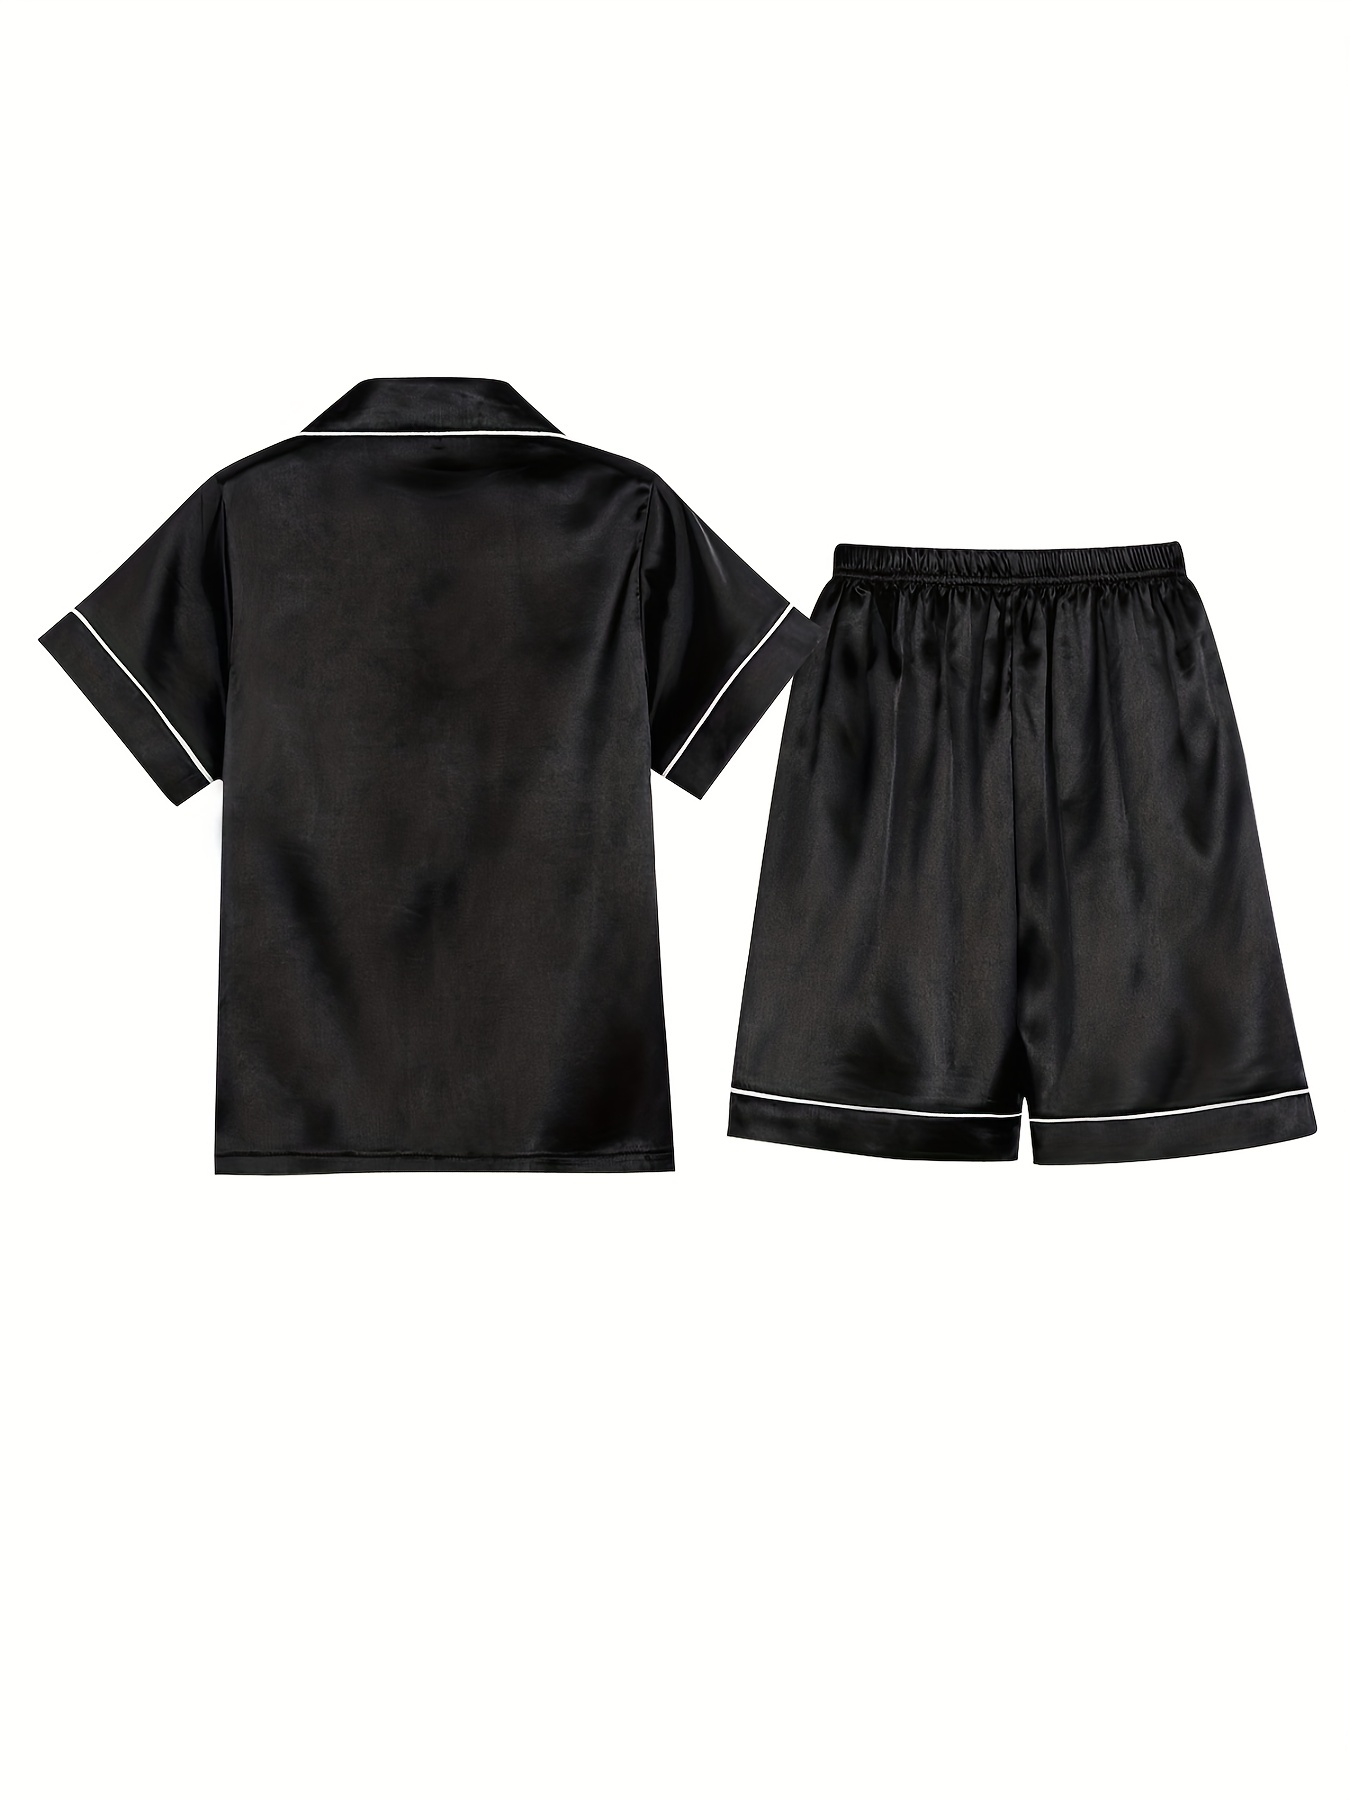 Teens Cotton Pajamas Sets 2021 Summer Girls Boy Short Sleeve Shorts Suit  Children Nightwear Sleepclothes Kids Sleepwear Homewear